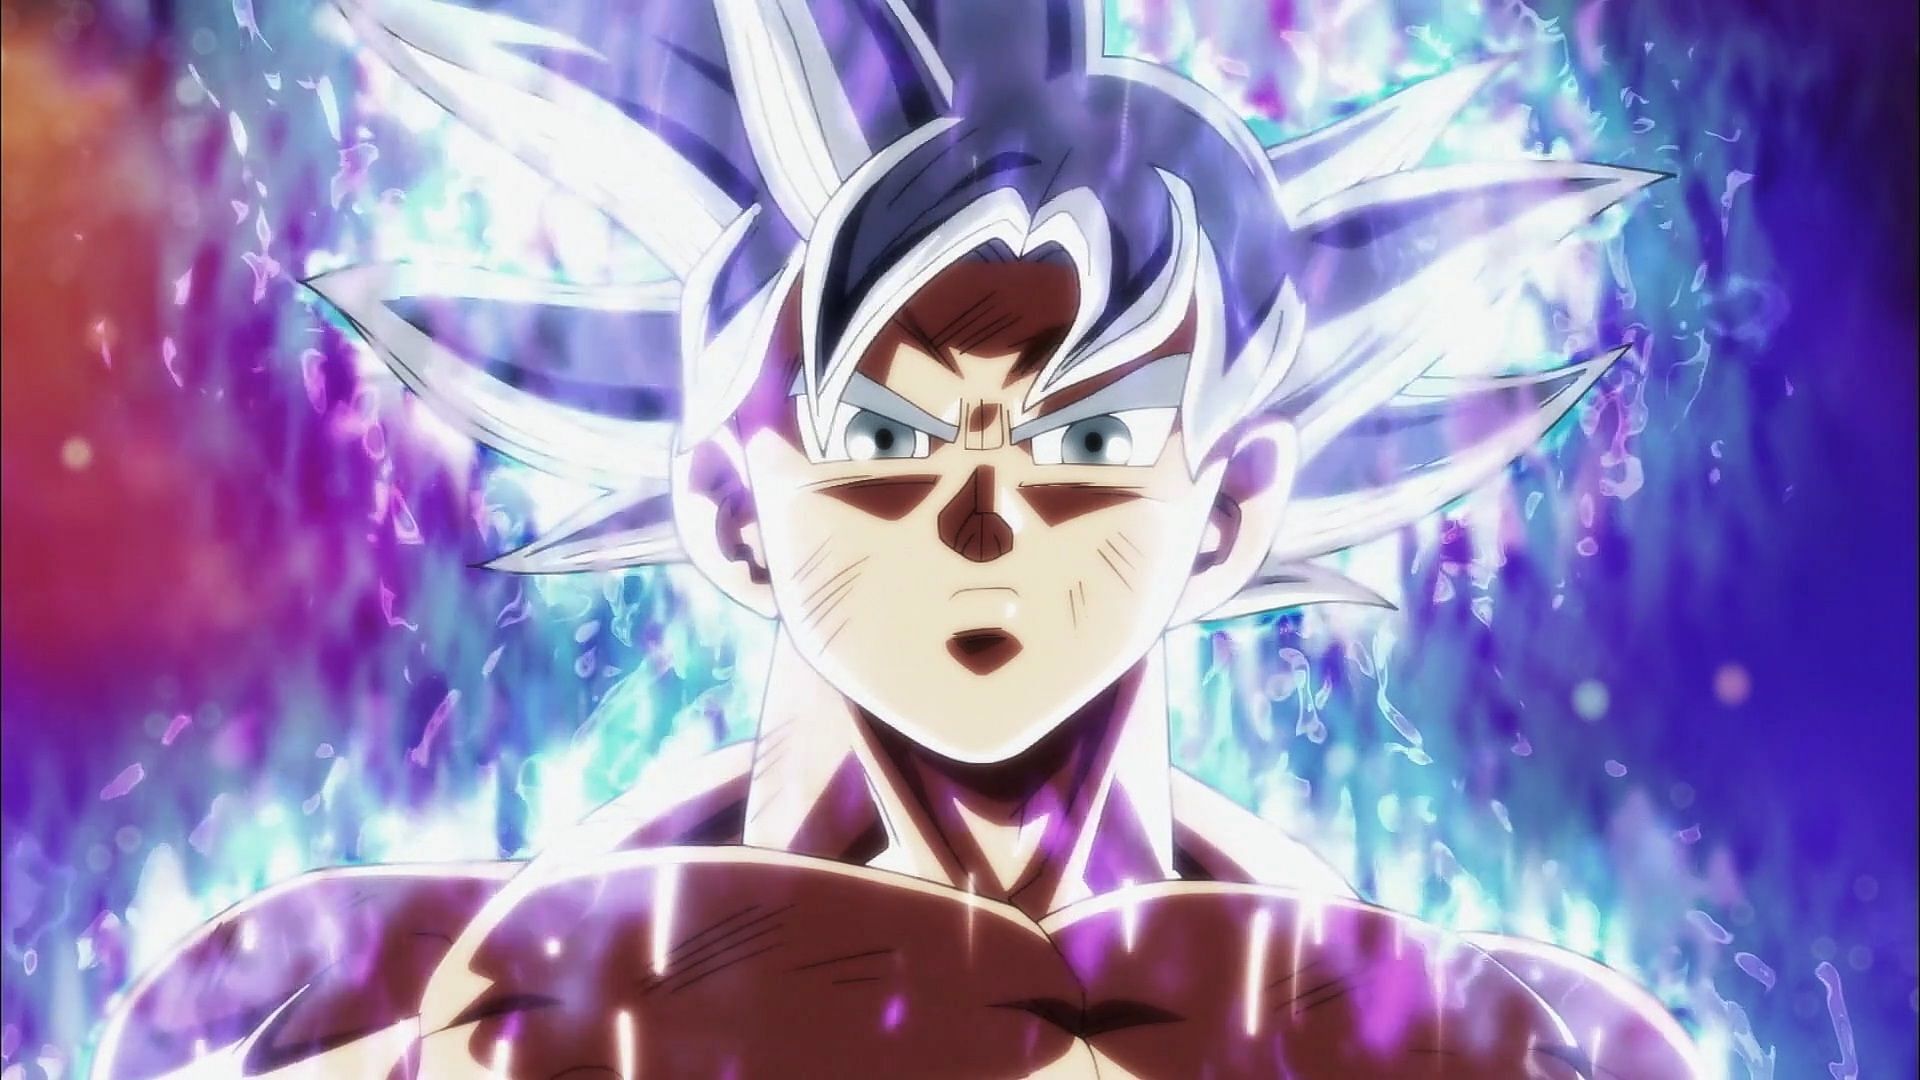 Goku vs Anime ProtagonistsHeroes  Power Levels Comparison  YouTube